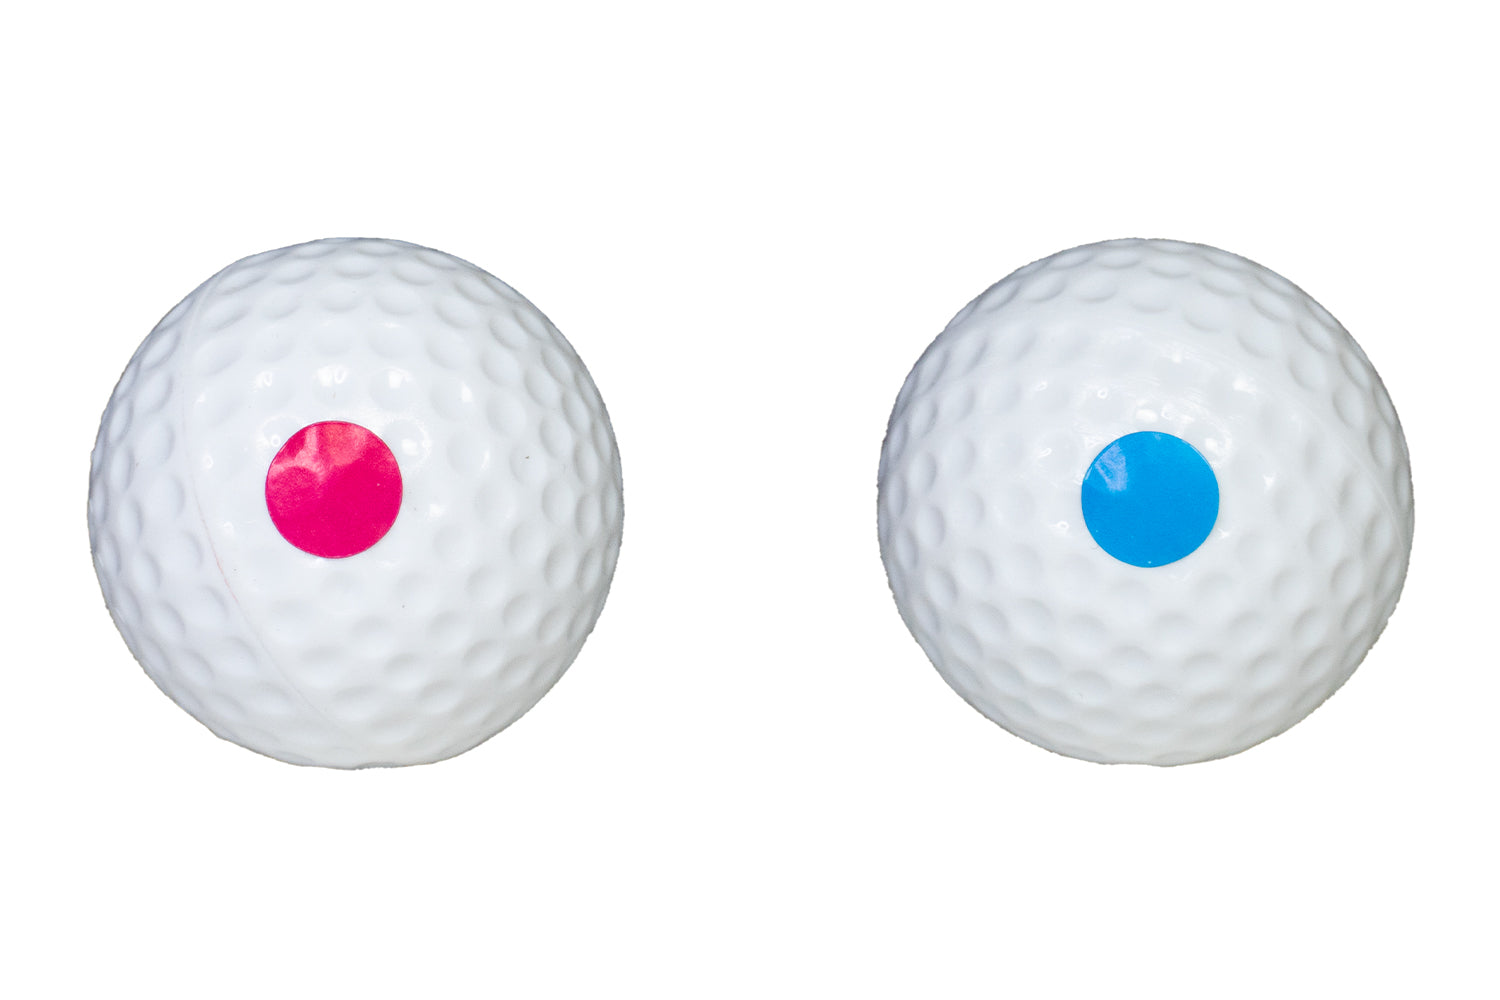 Gender Reveal Golf Ball Set - GOLFGENDER